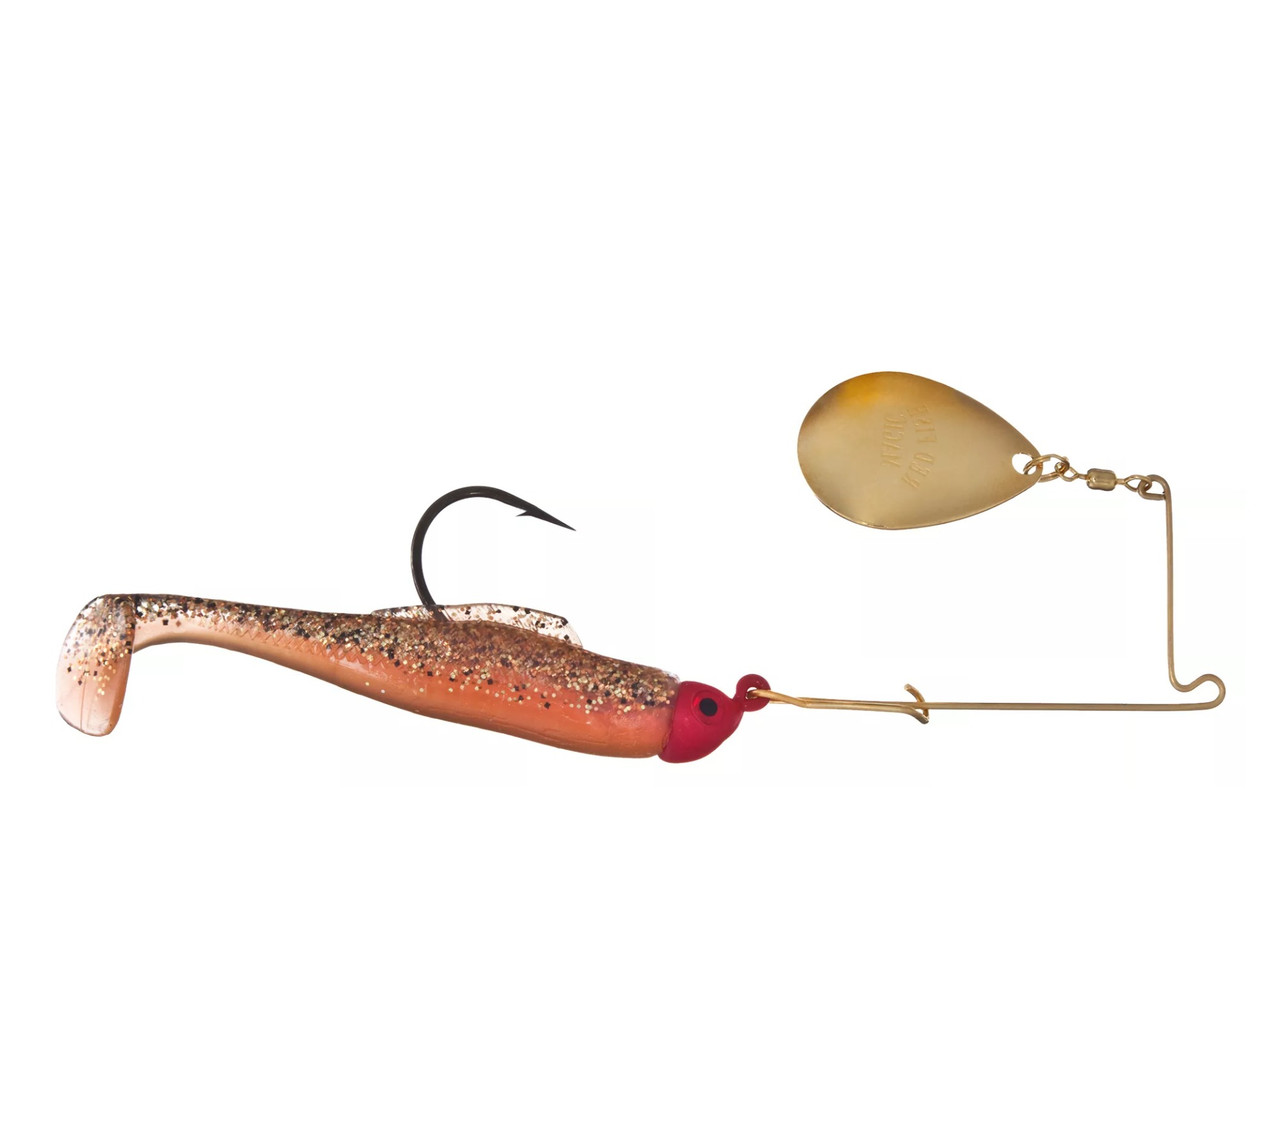 Strike King Redfish Magic Spinnerbait (New Penny) 1/8oz Fishing Lure  #RMG18-160